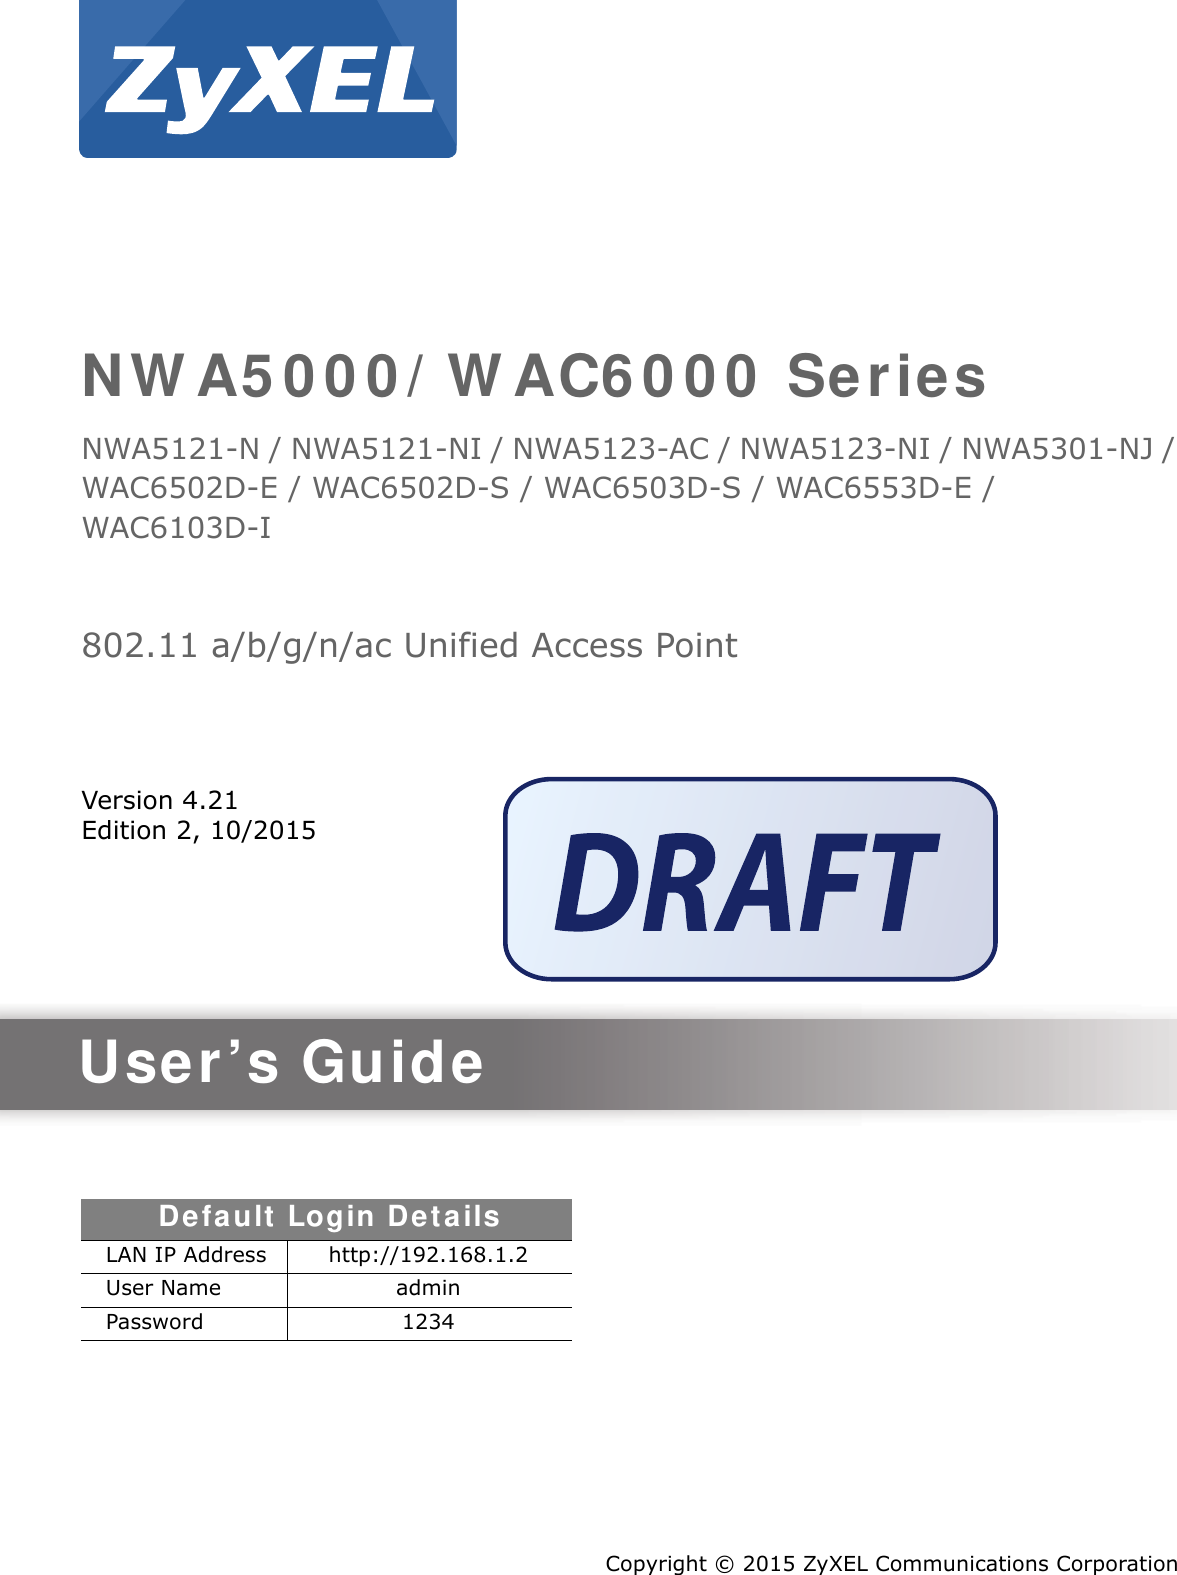 Quick Start Guidewww.zyxel.comNWA5000/WAC6000 SeriesNWA5121-N / NWA5121-NI / NWA5123-AC / NWA5123-NI / NWA5301-NJ / WAC6502D-E / WAC6502D-S / WAC6503D-S / WAC6553D-E /  WAC6103D-I802.11 a/b/g/n/ac Unified Access PointVersion 4.21Edition 2, 10/2015Copyright © 2015 ZyXEL Communications CorporationUser’s GuideDefault Login DetailsLAN IP Address http://192.168.1.2User Name adminPassword 1234